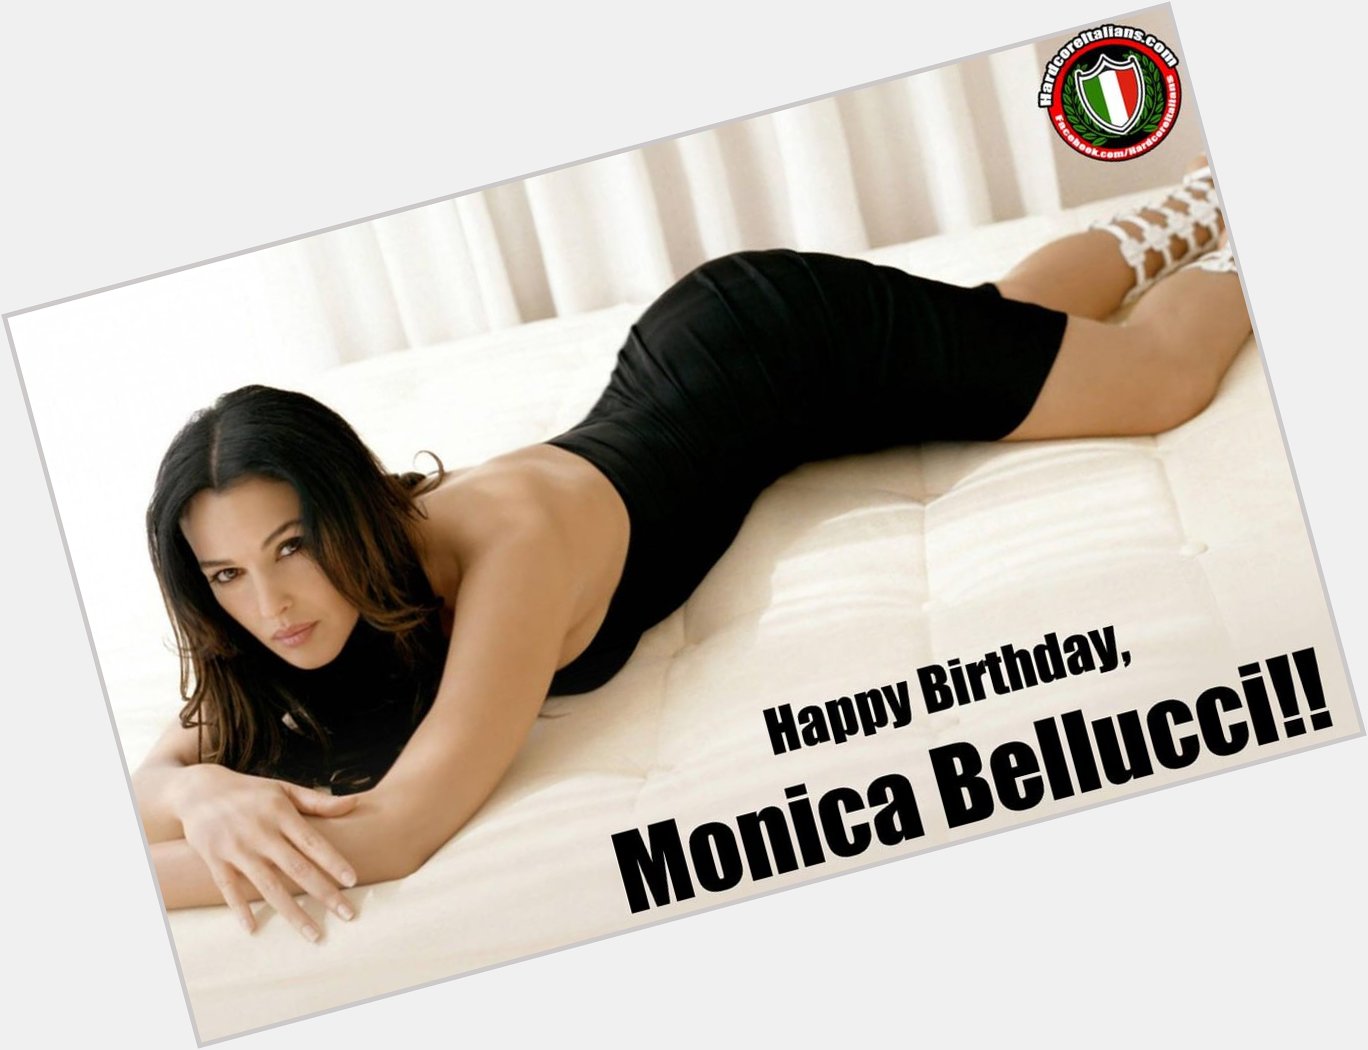 Happy Birthday and Monica Bellucci :) 